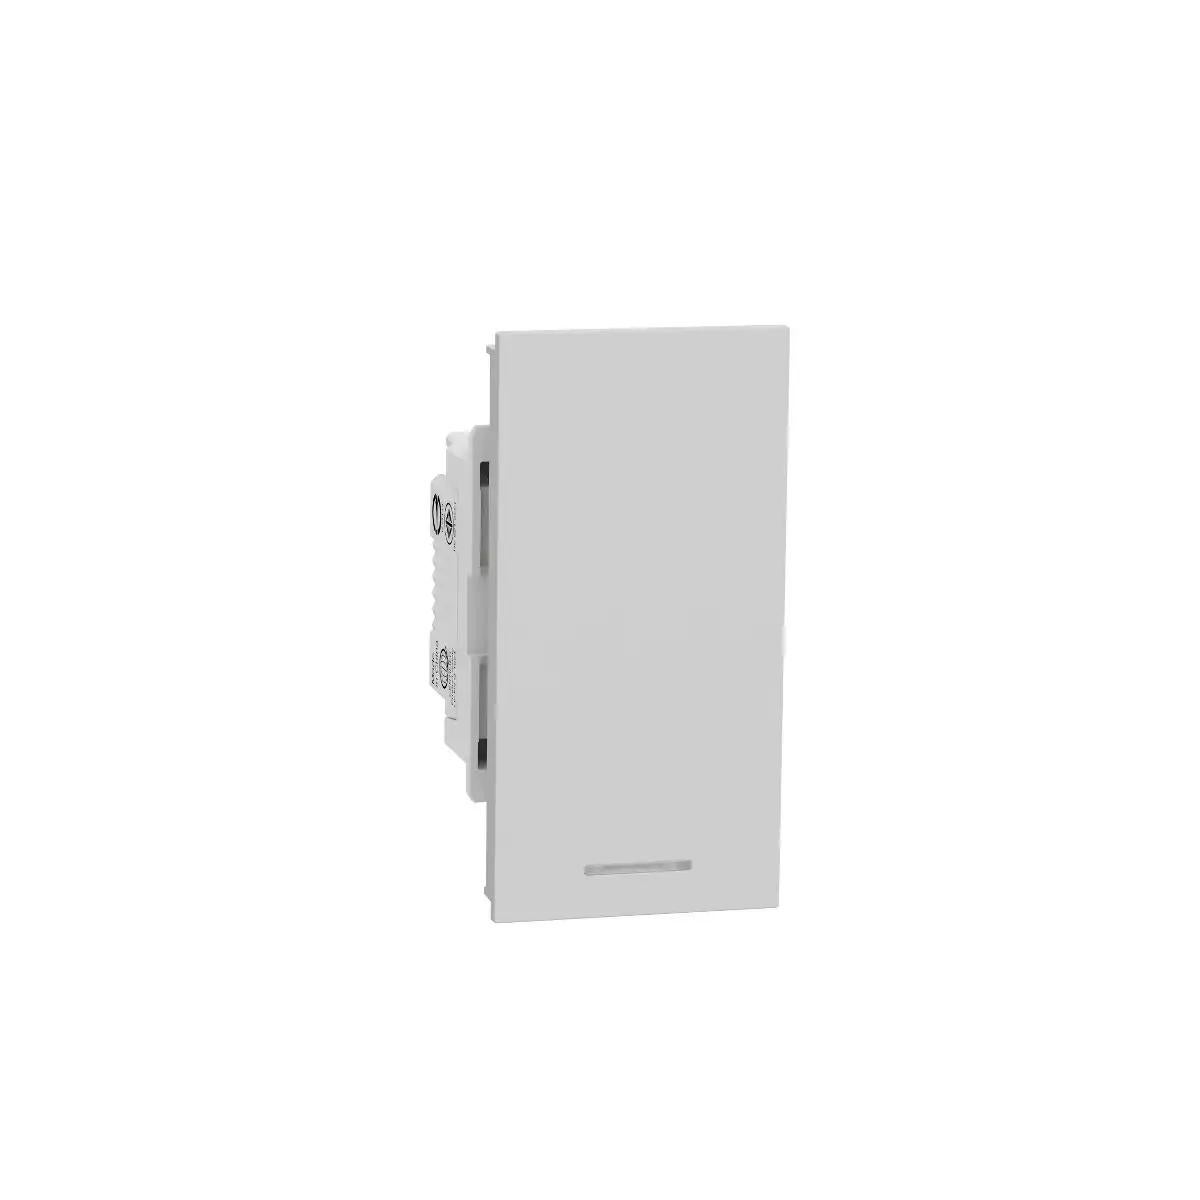 Switch, Avataron A, 16AX 250V, 1 Way with Fluorescent M sized, Grey